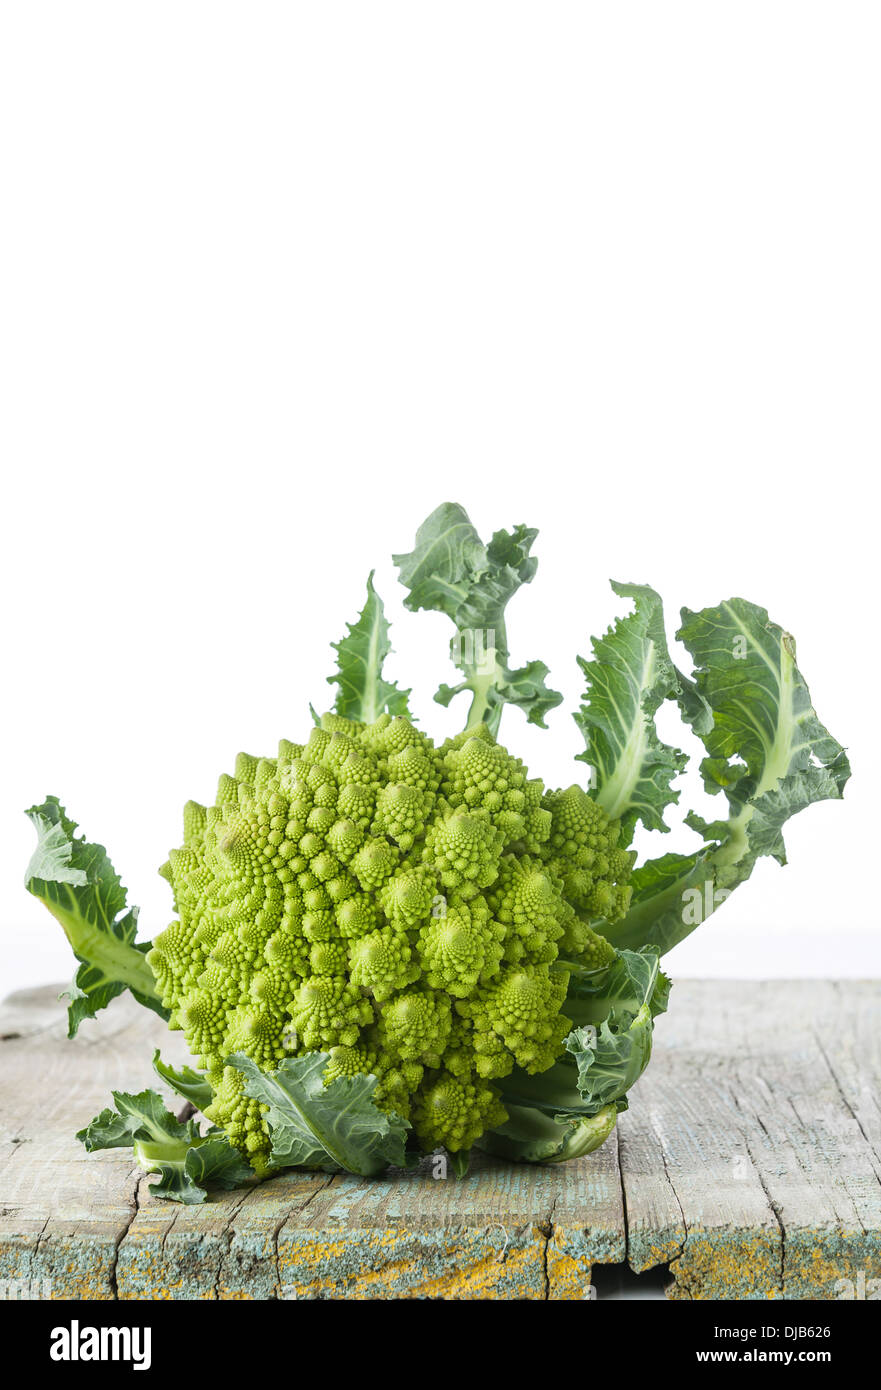 Cauliflower Romanesco on white background Stock Photo